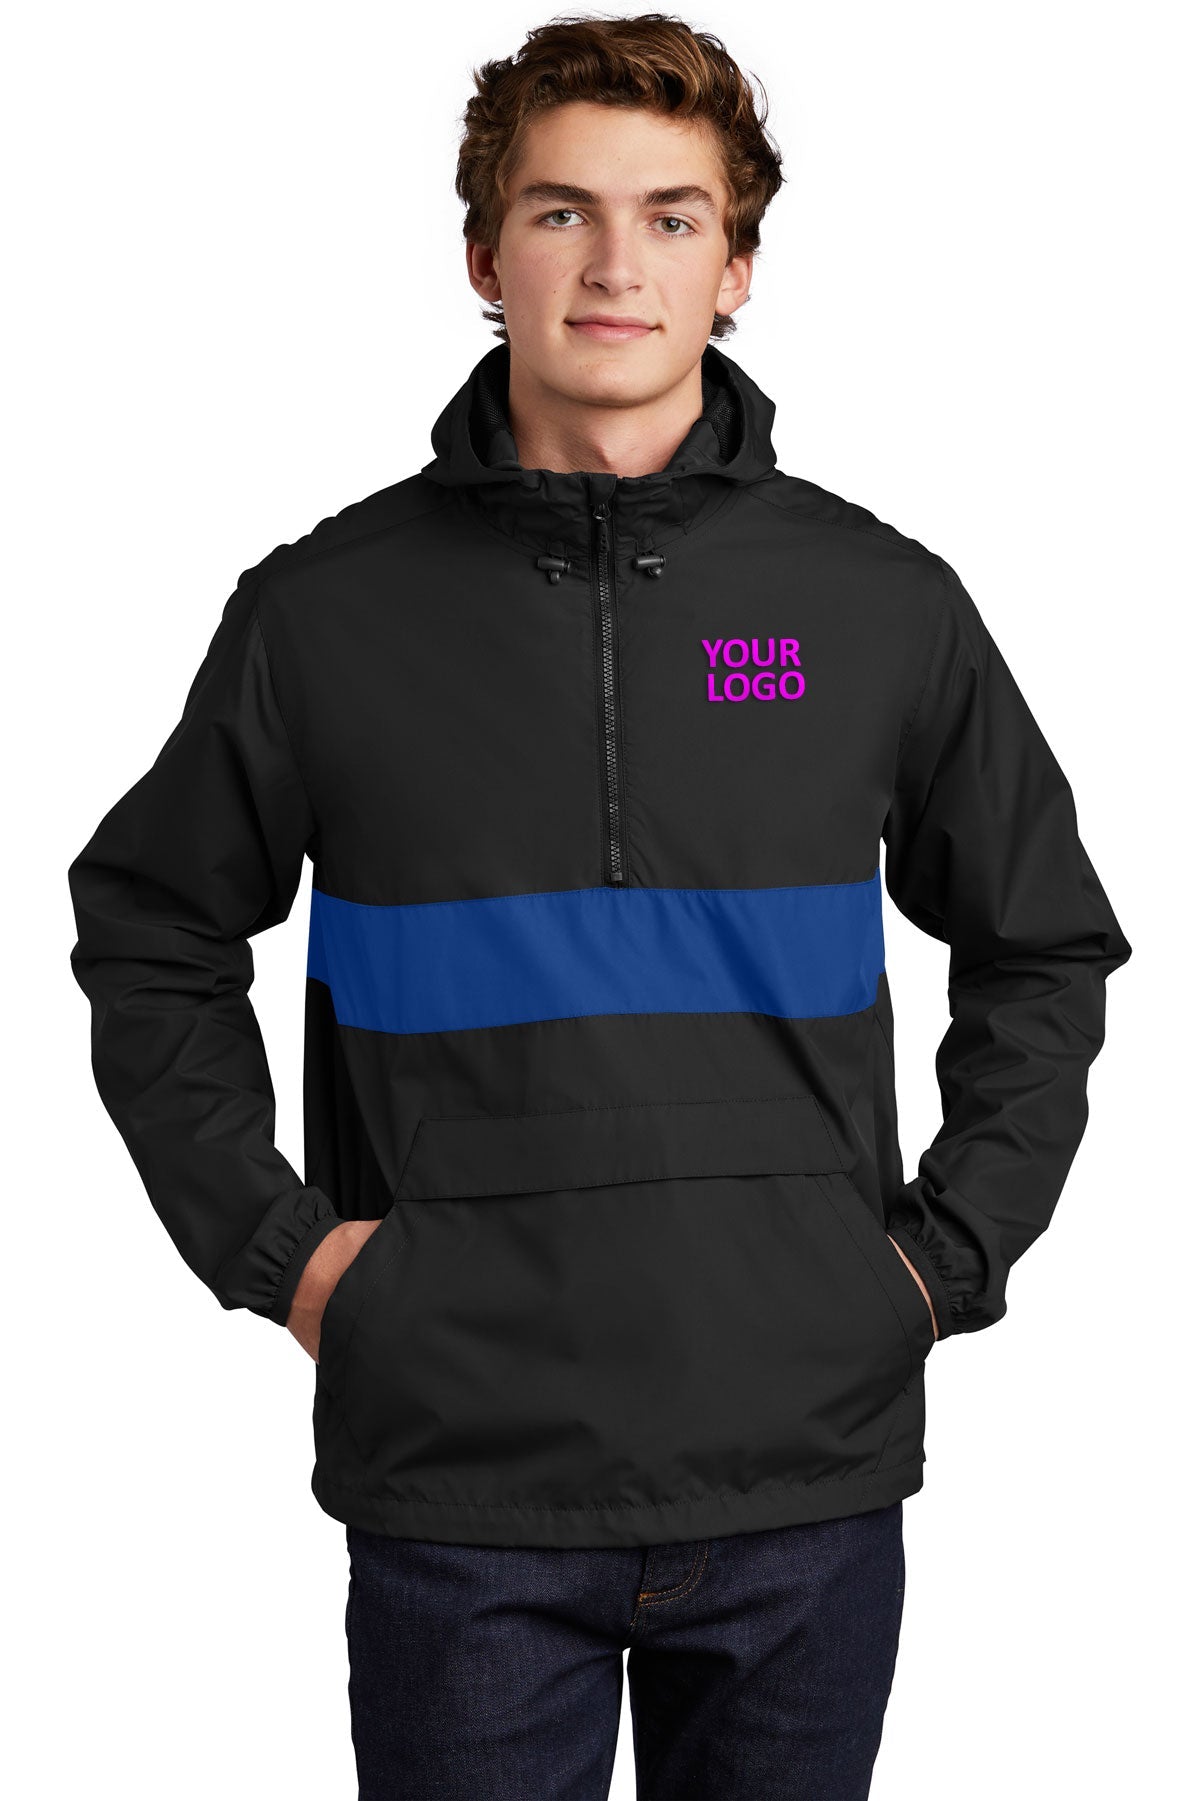 Sport-Tek Black/ True Royal JST65 jacket company logo